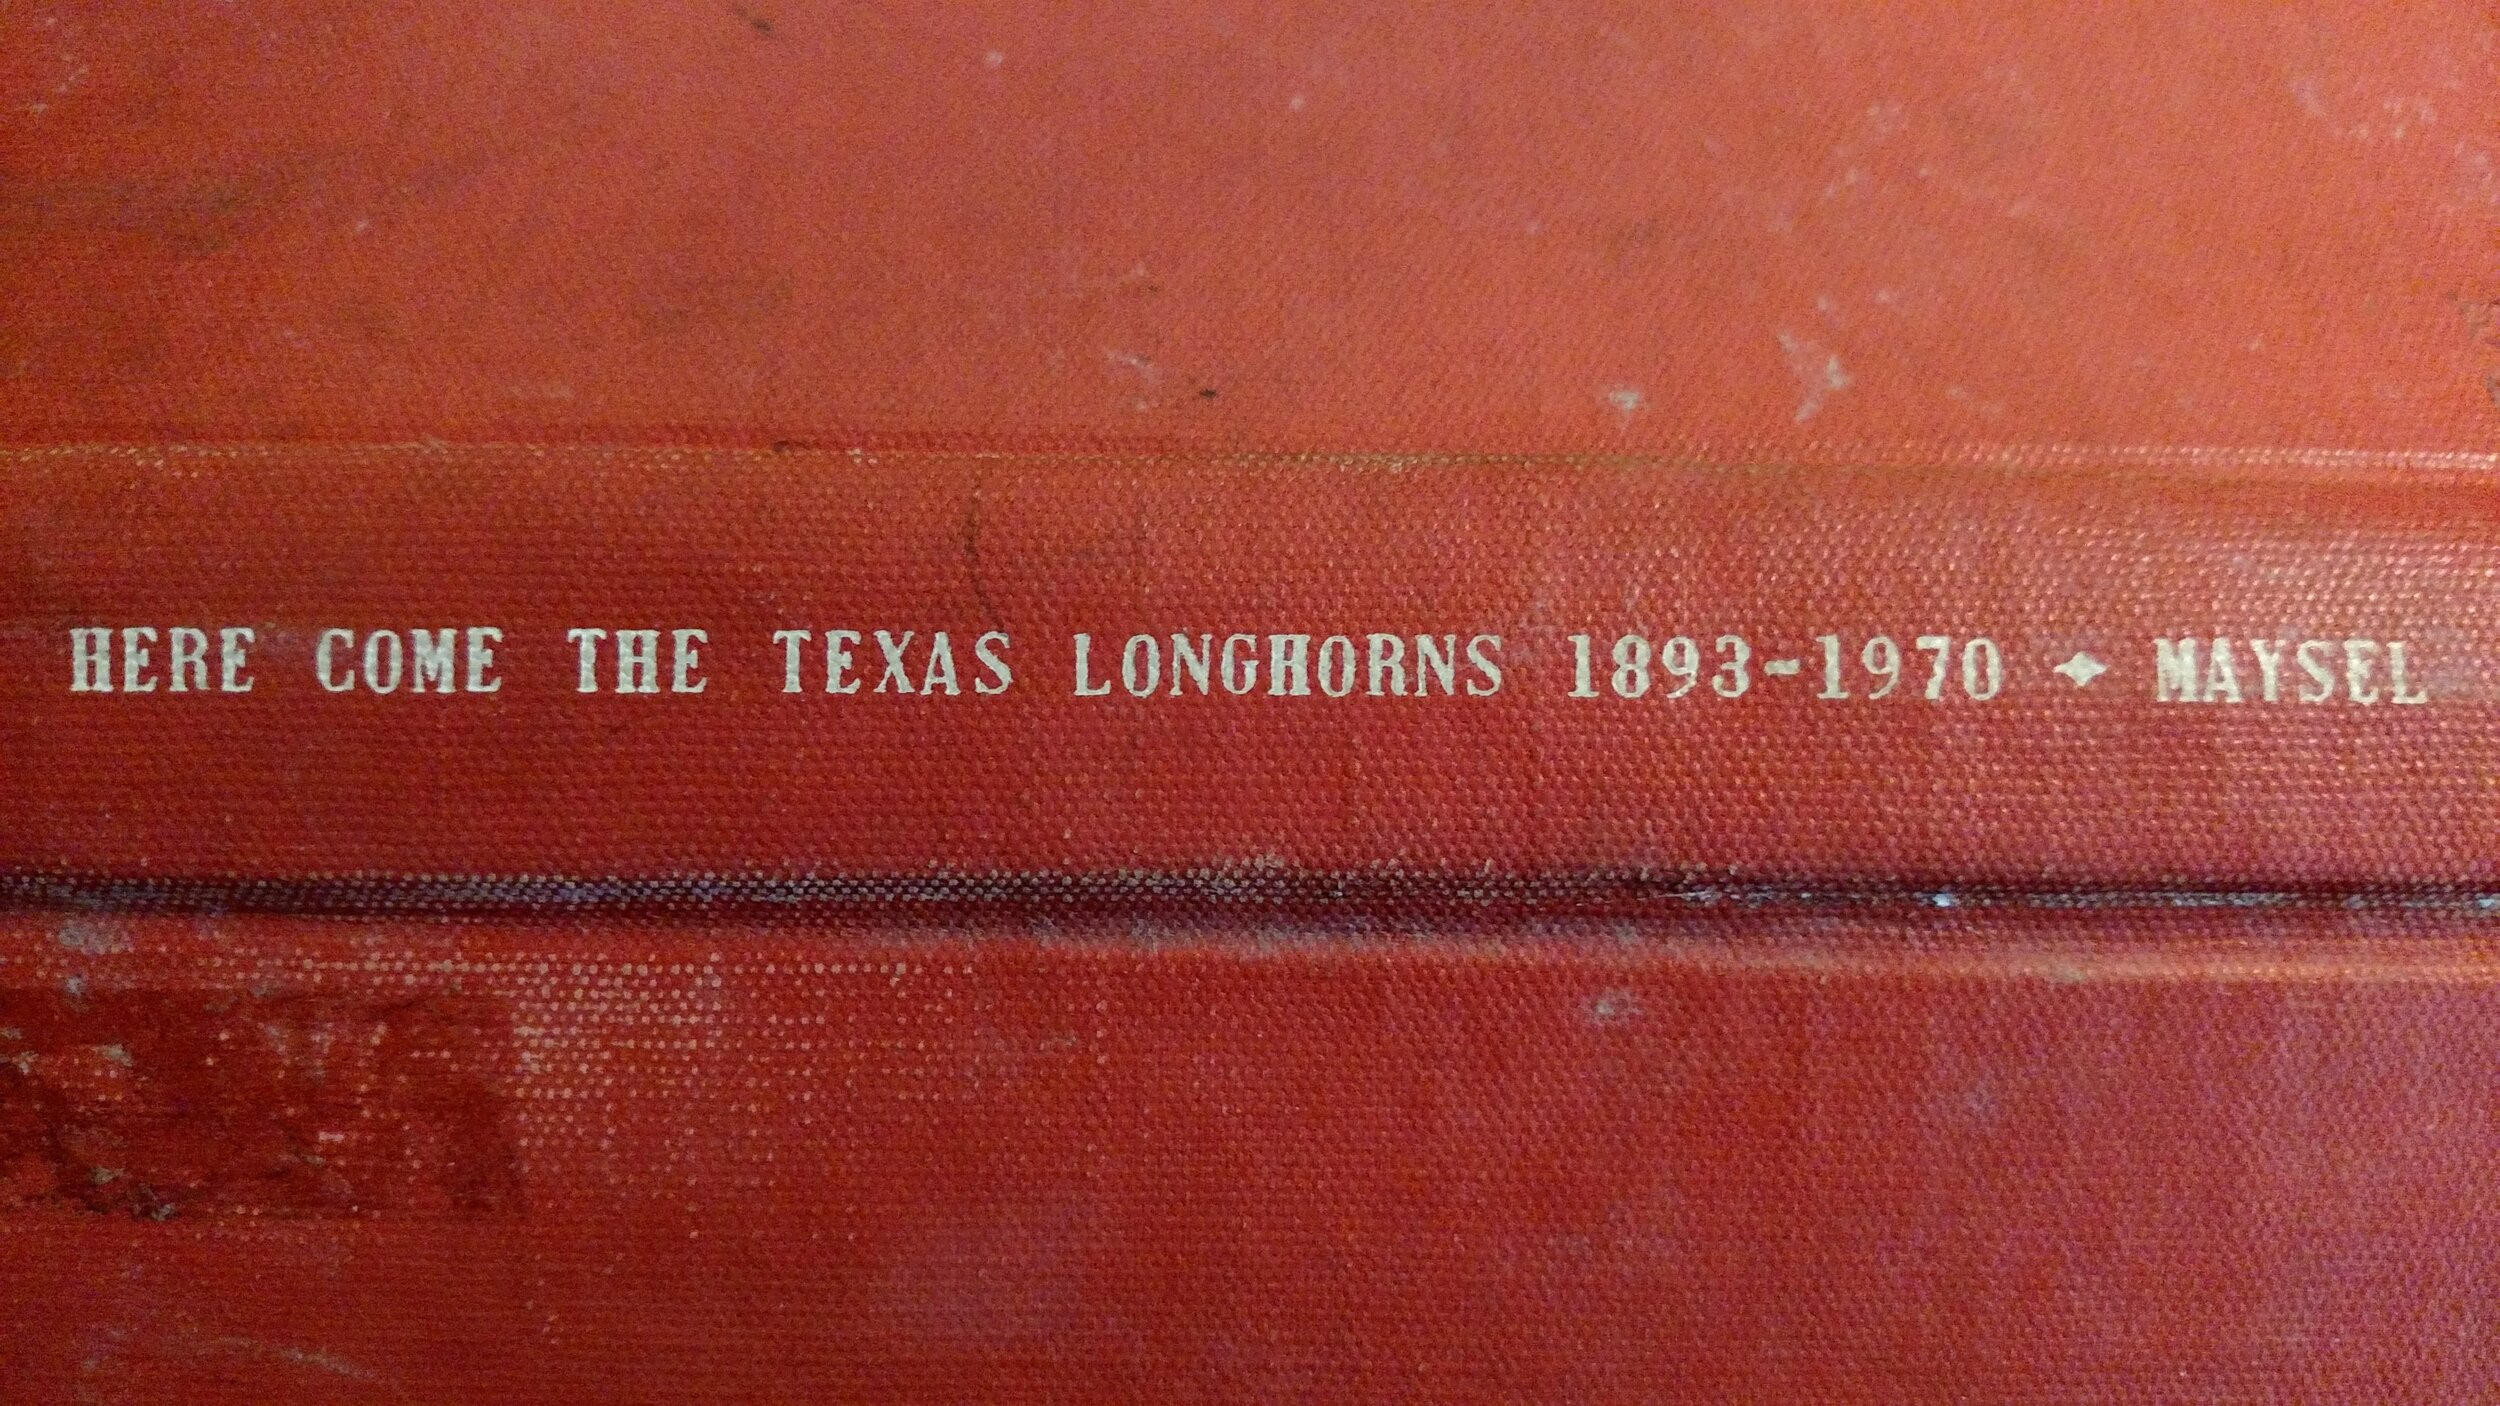 Here come the Texas Longhorns 1893-1970.jpg